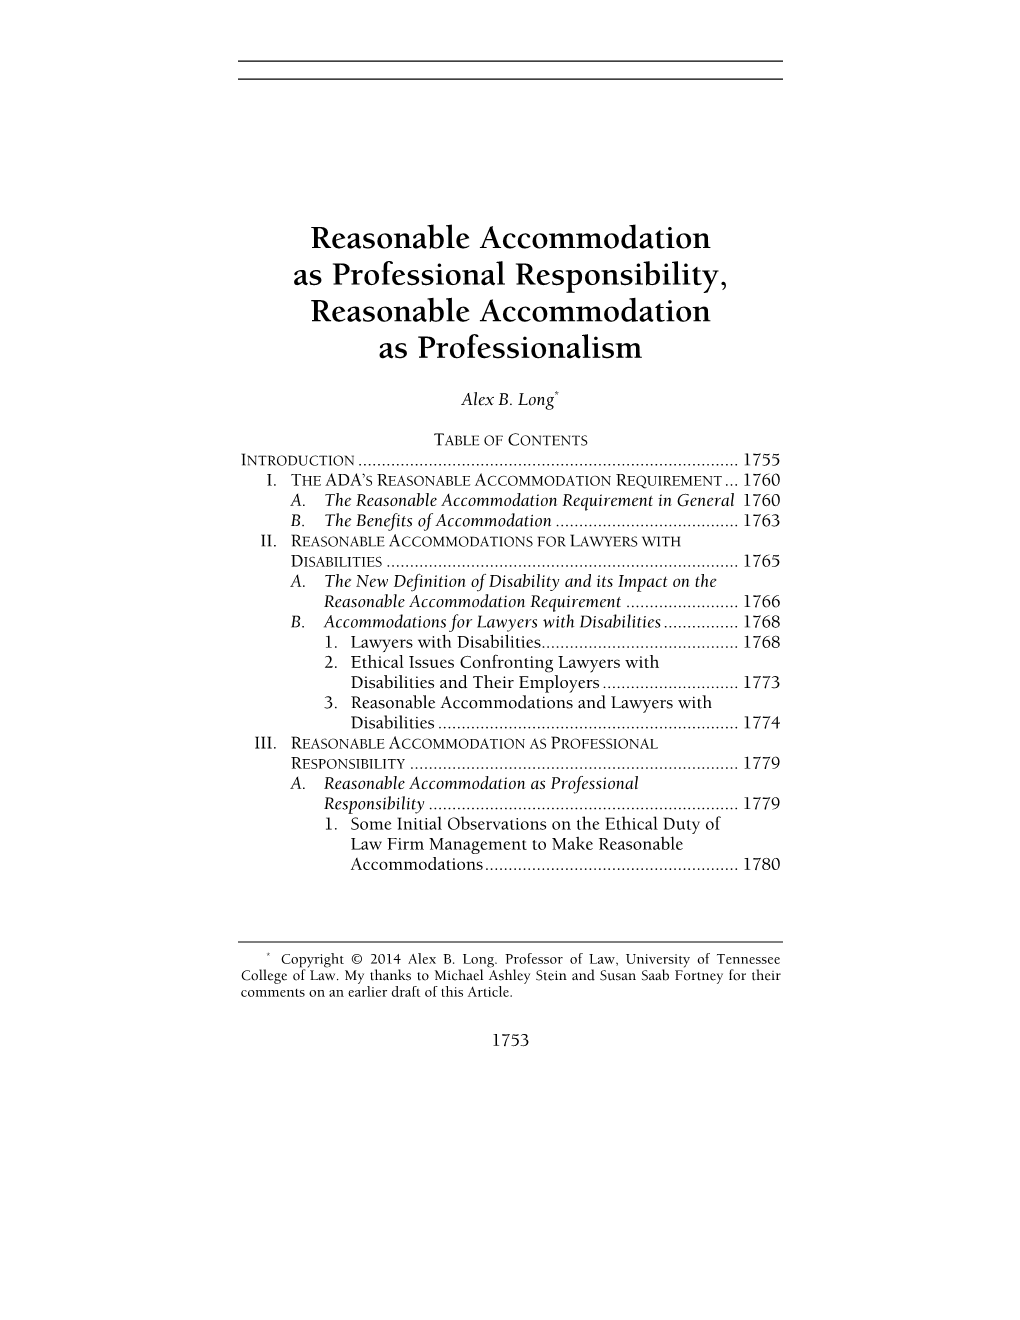 Reasonable Accommodation As Professional Responsibility, Reasonable Accommodation As Professionalism